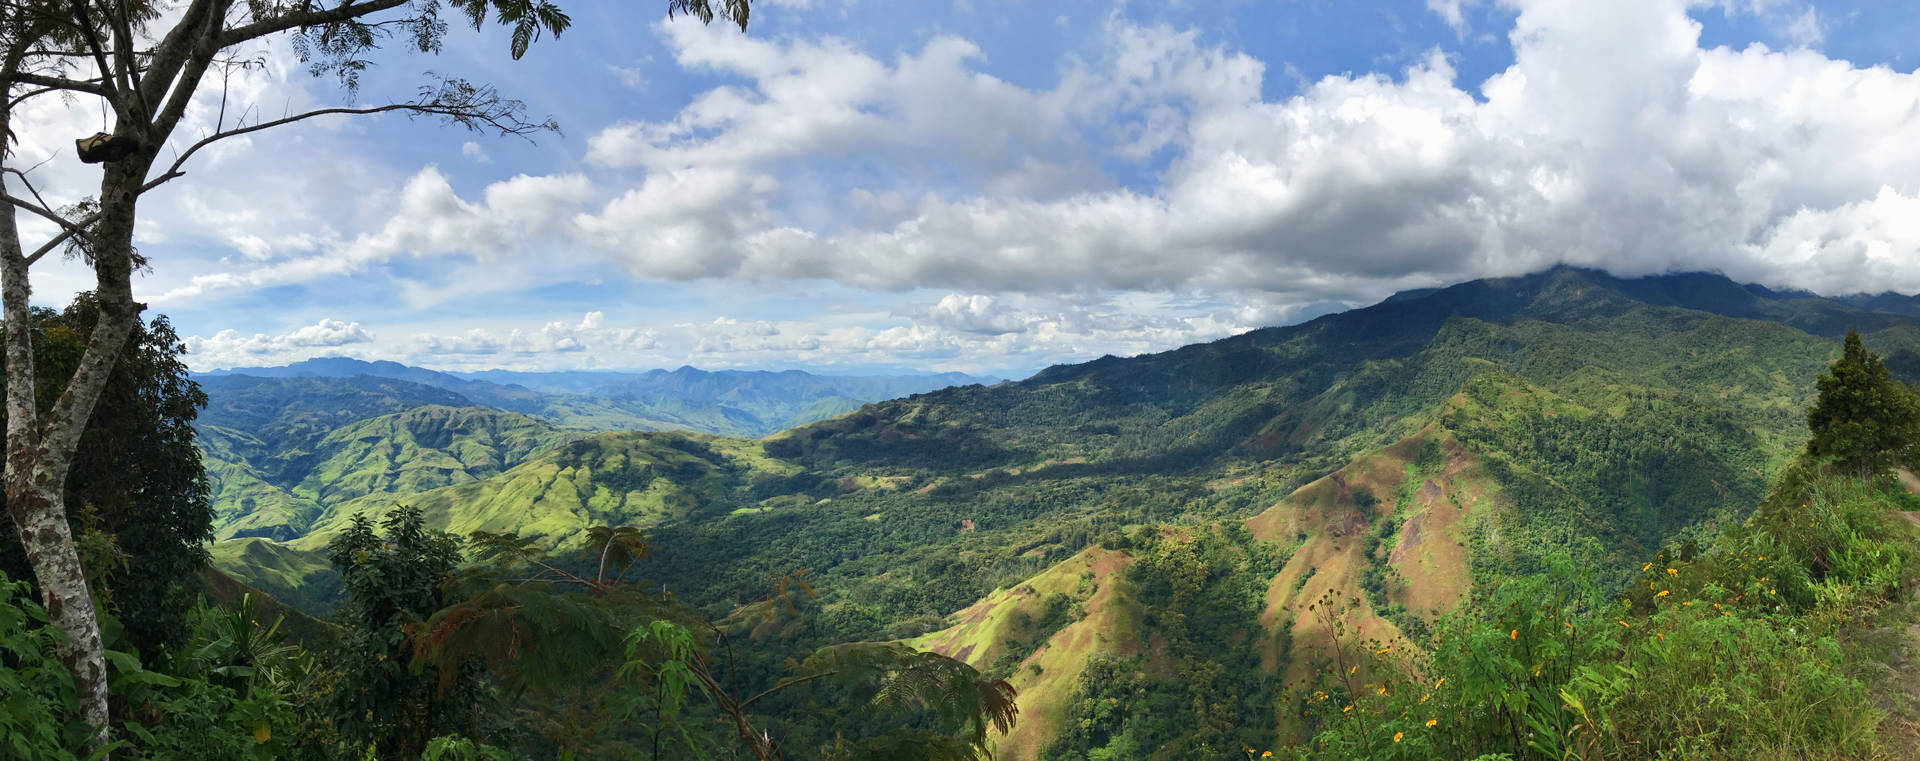 Papua New Guinea Vast Mountains